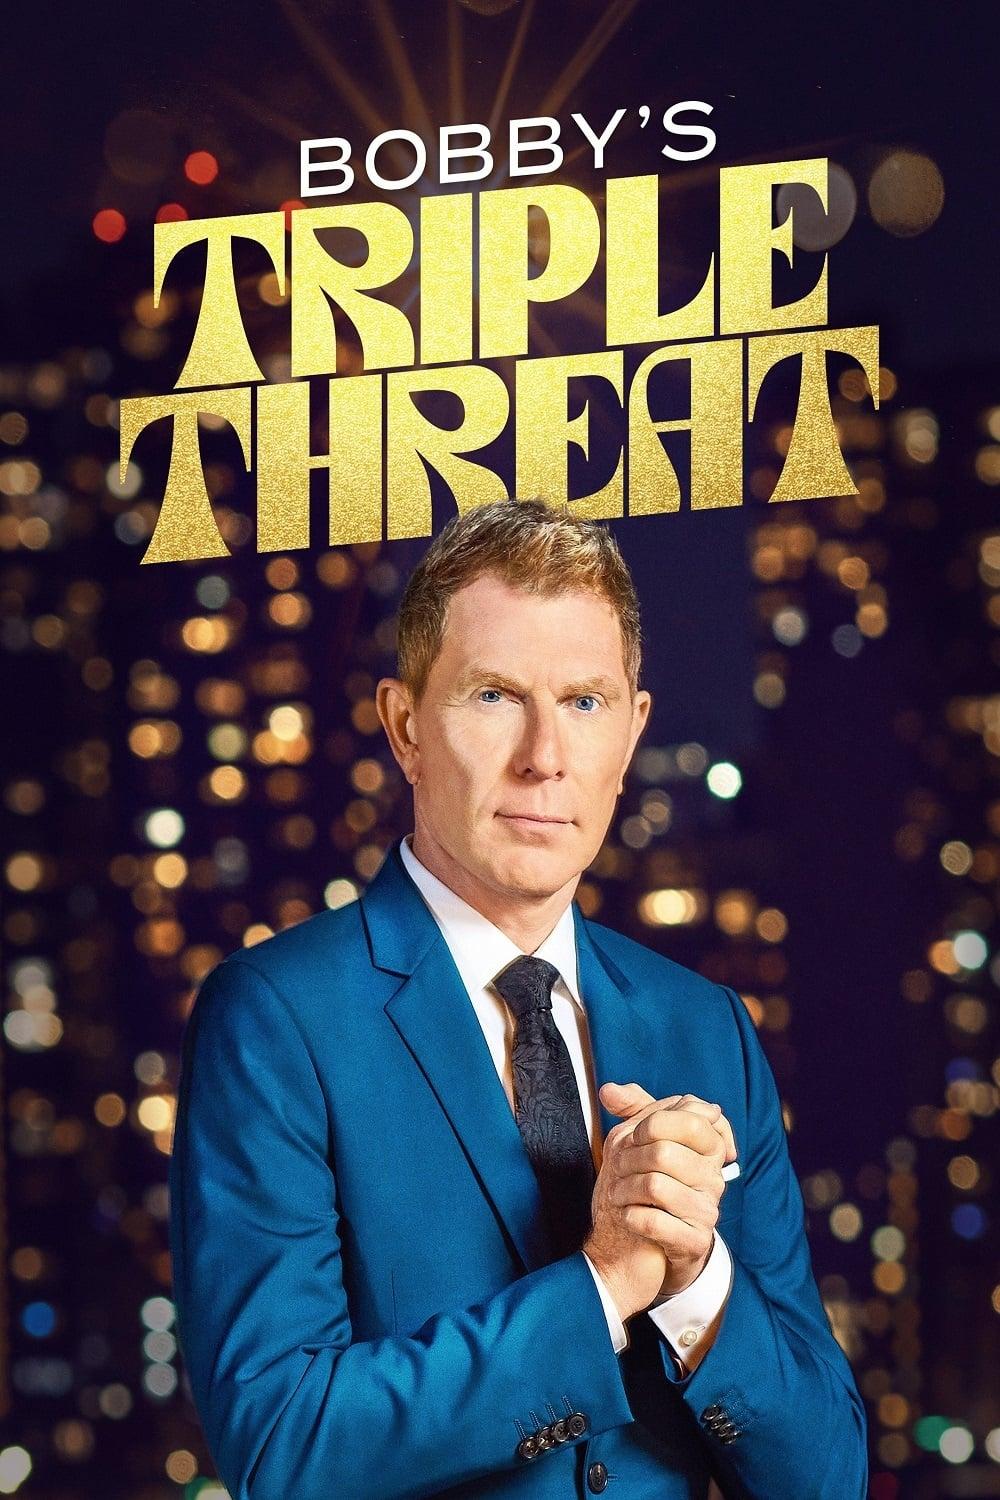 Bobby's Triple Threat poster